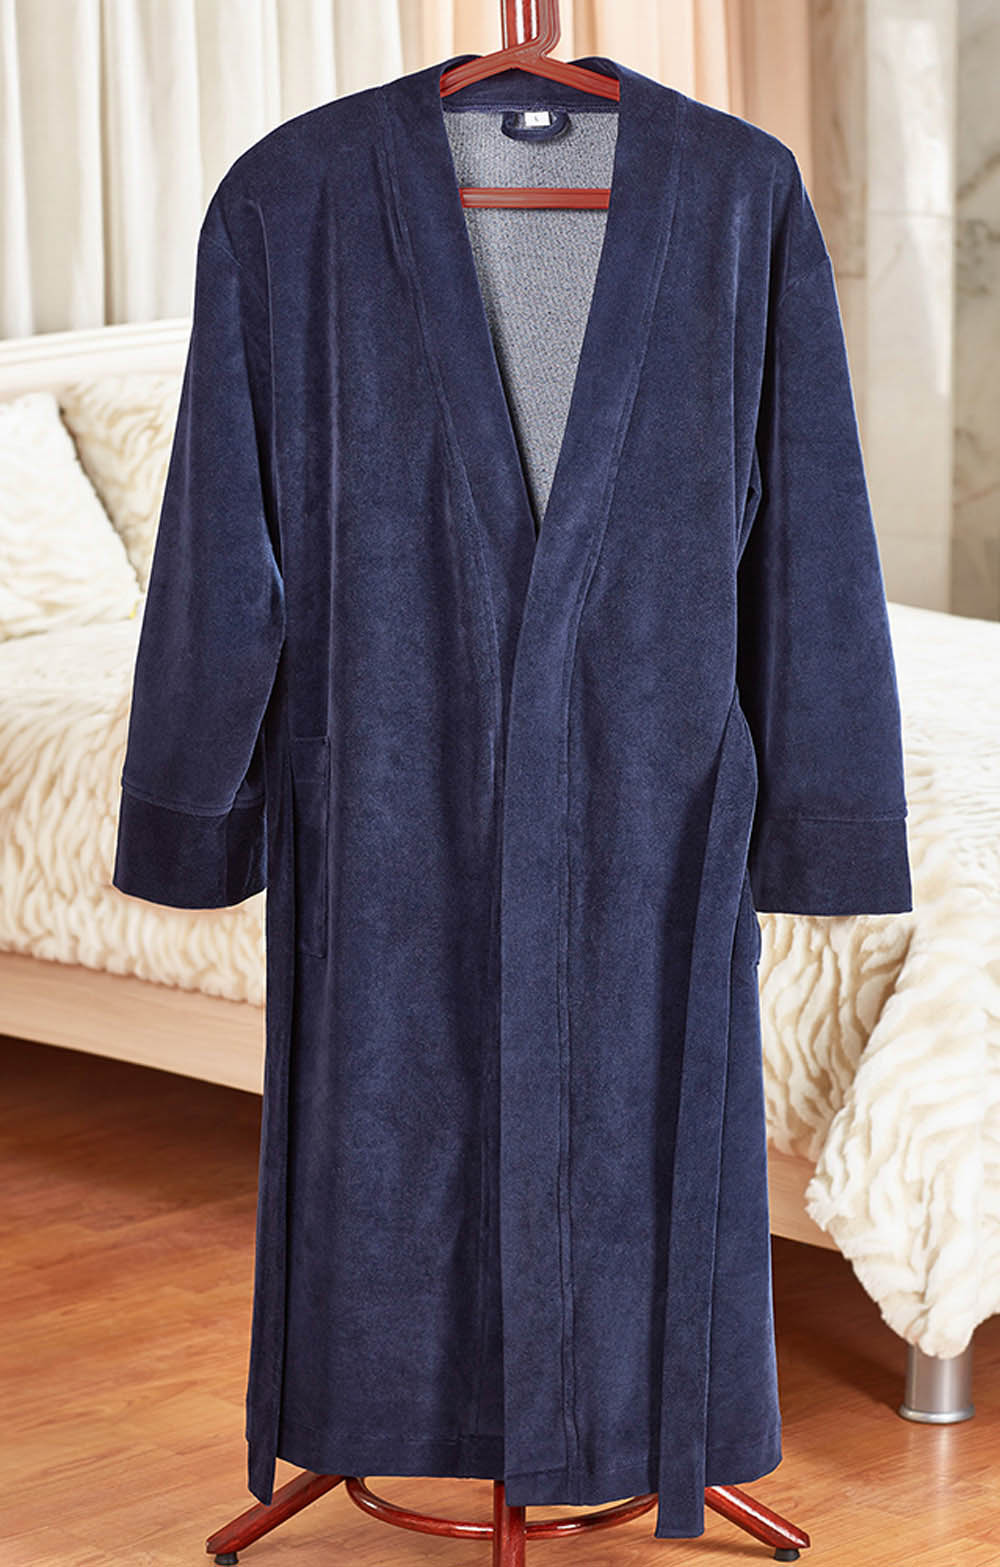 Банный халат Enrico цвет: темно-синий (L-XL) Primavelle pve319729